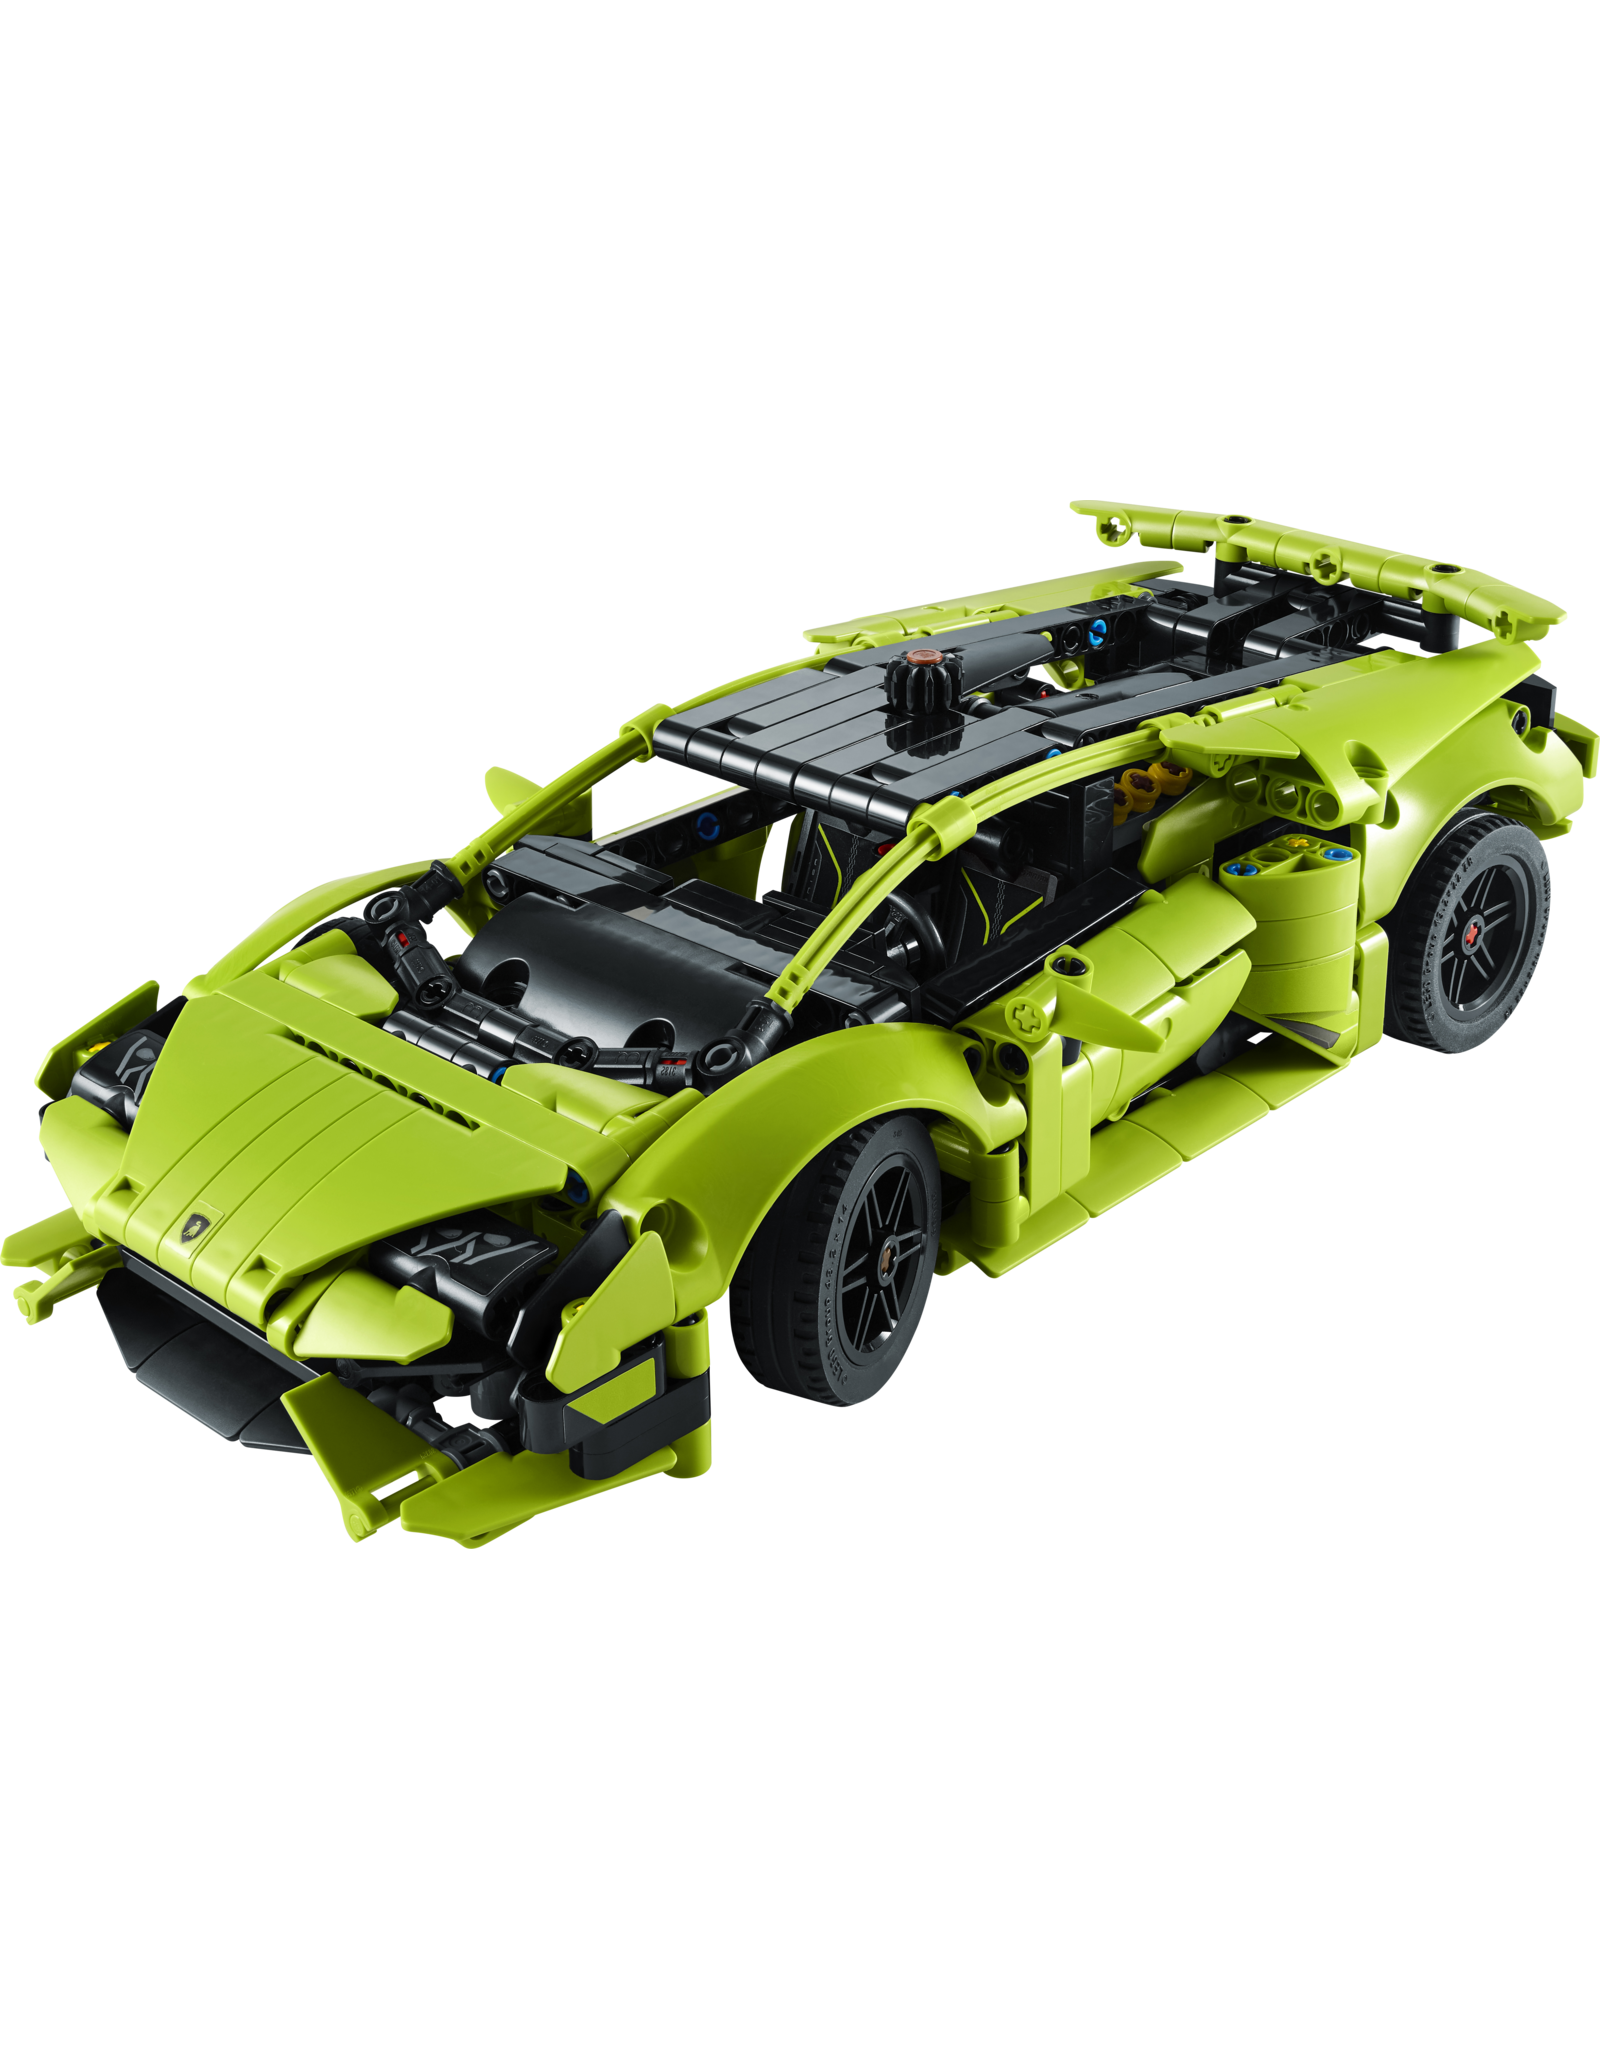 LEGO Technic 42161 Lamborghini Huracan Tecnica